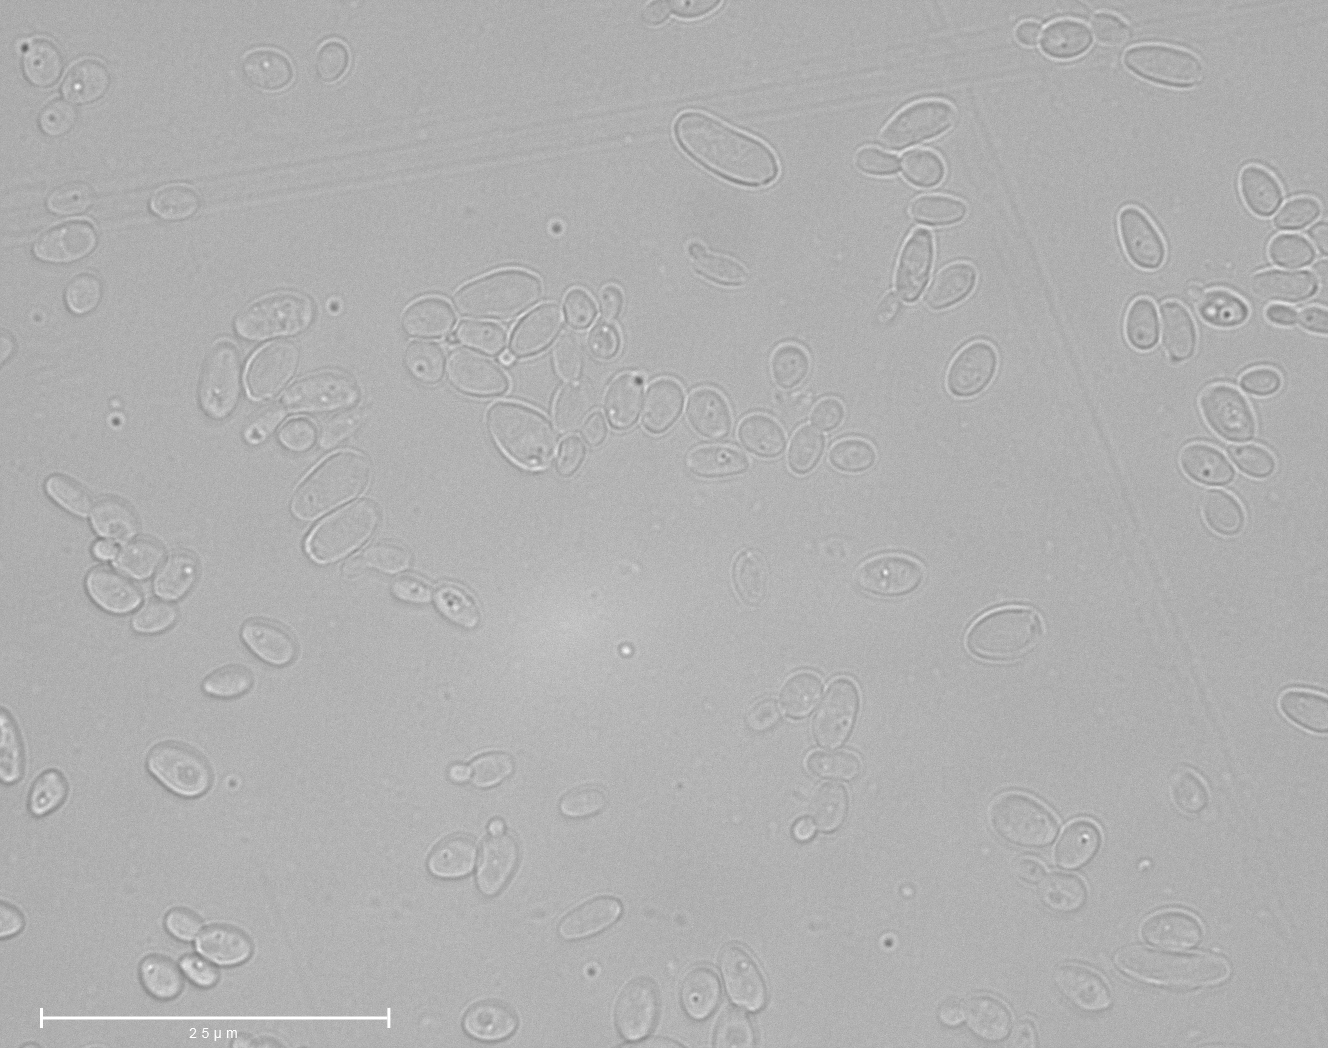 Scheffersomyces amazonensis UFMG-HMD-26.3. Image by Katharina de Oliveira Barros.